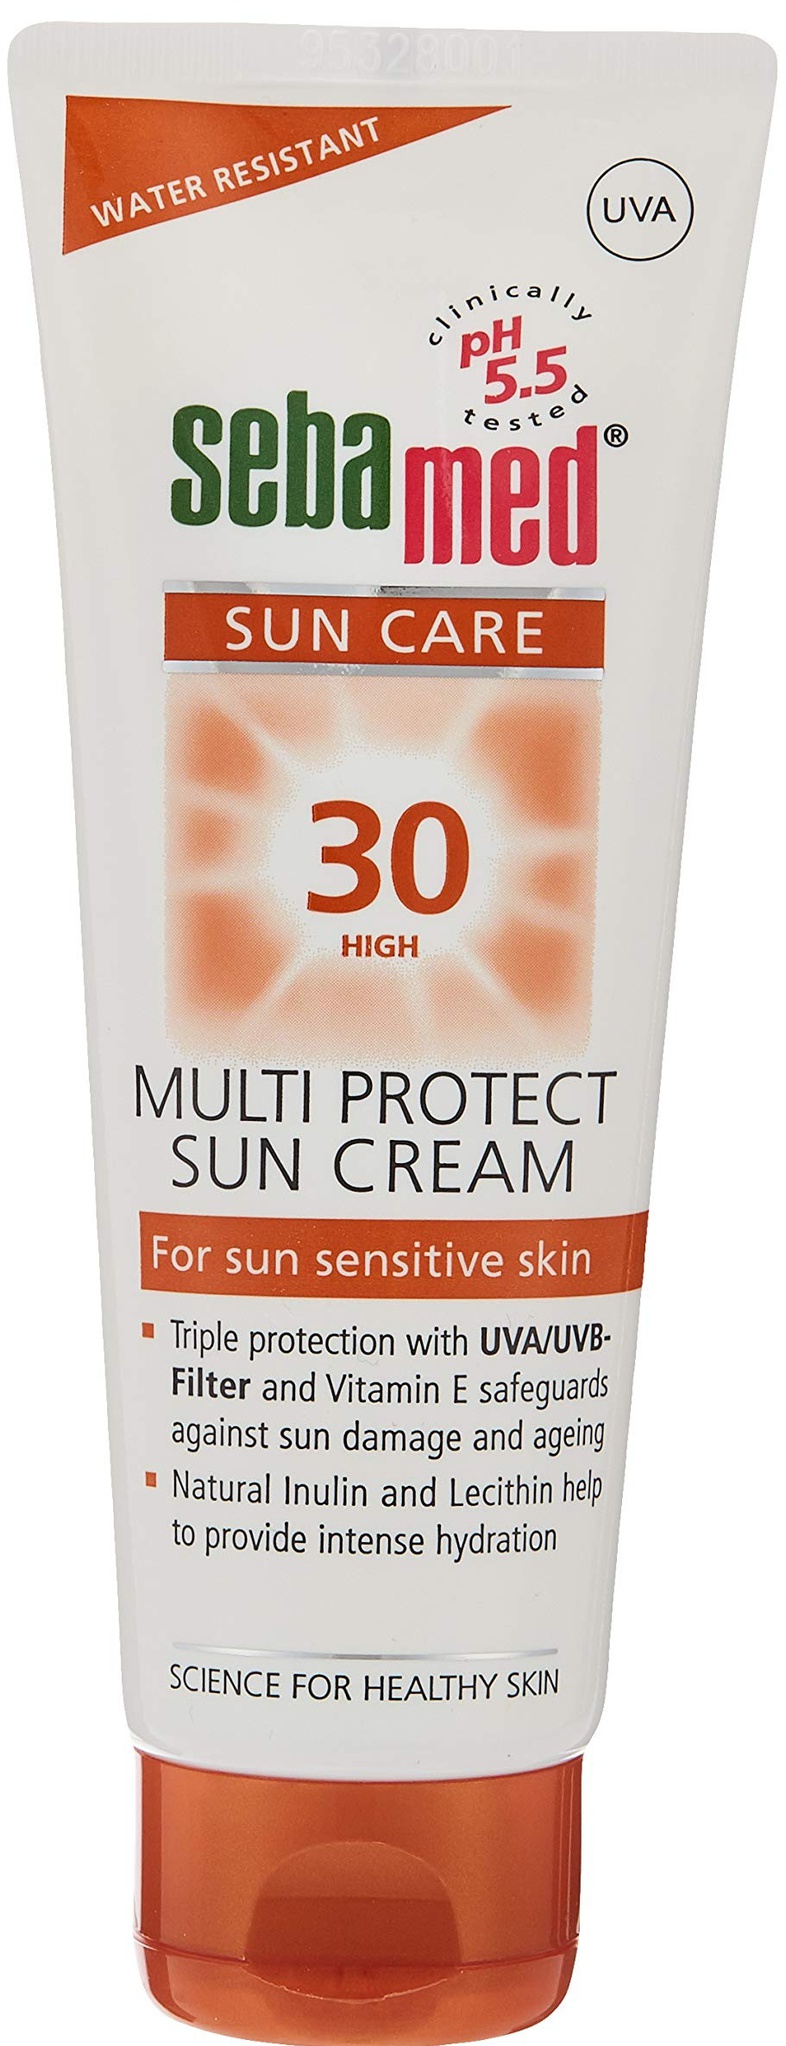 Sebamed Multi Protect Sun Cream SPF 30